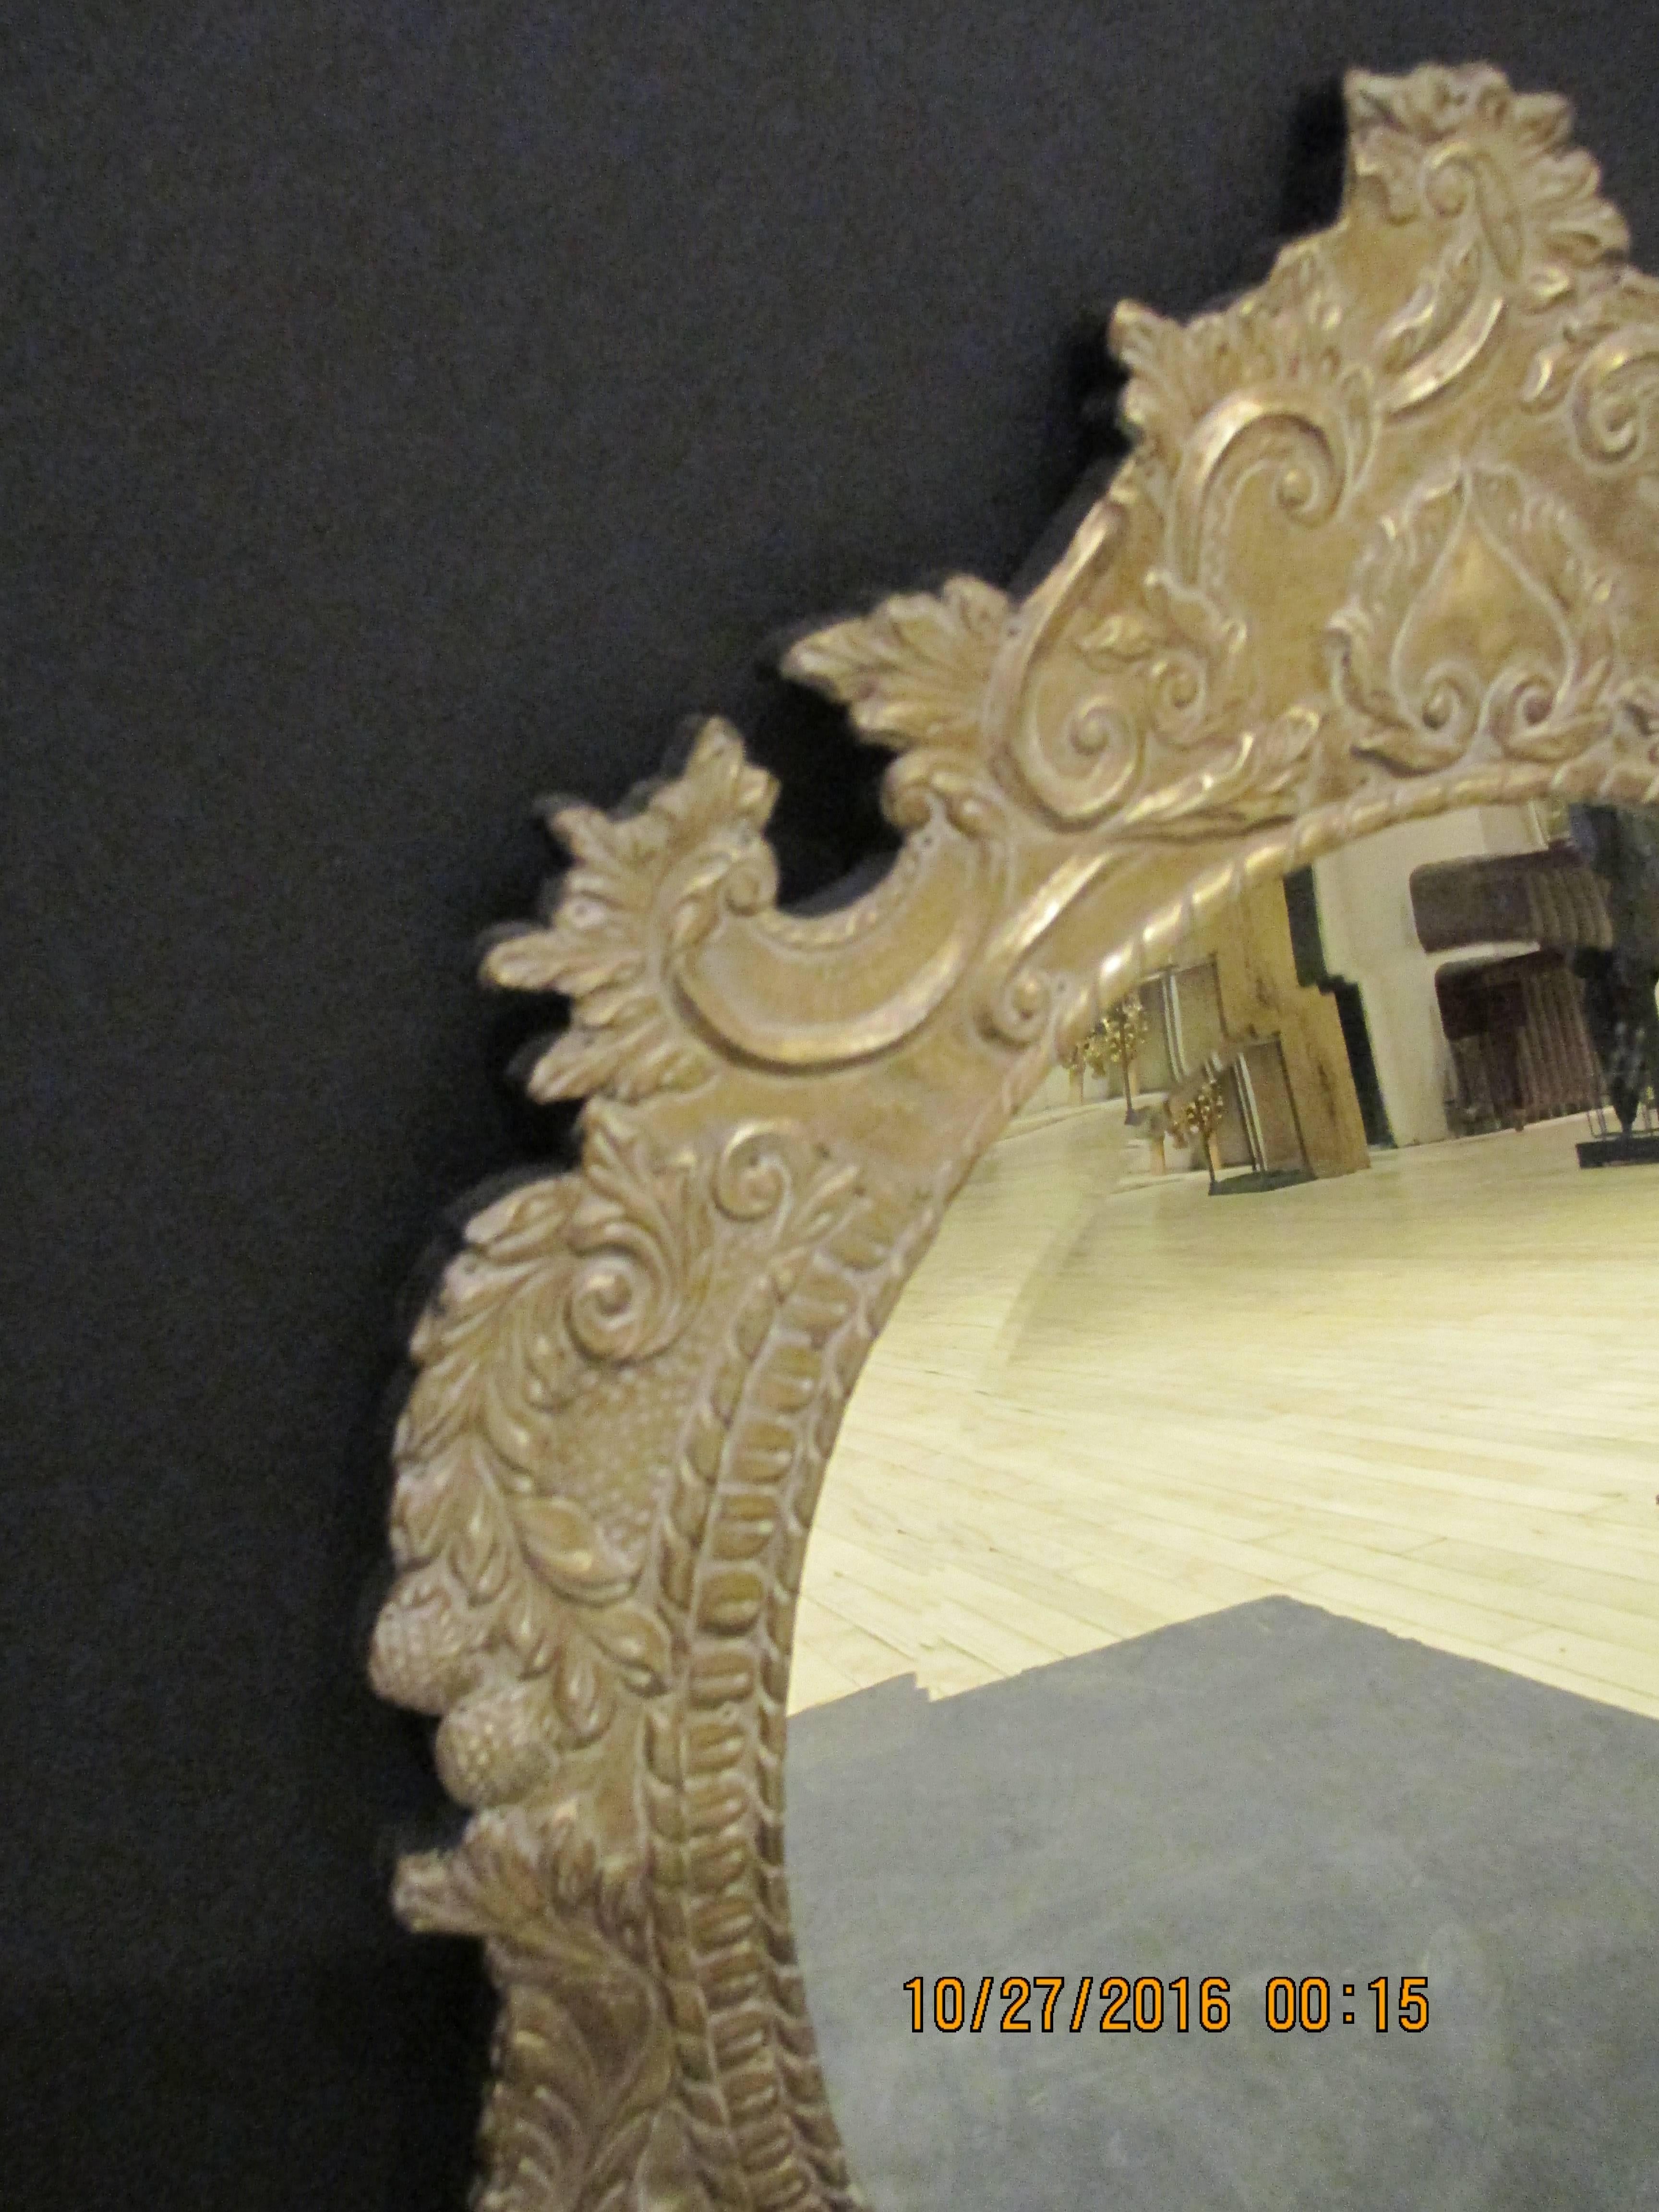 Oval metal-clad mirror.
Measures: H 26